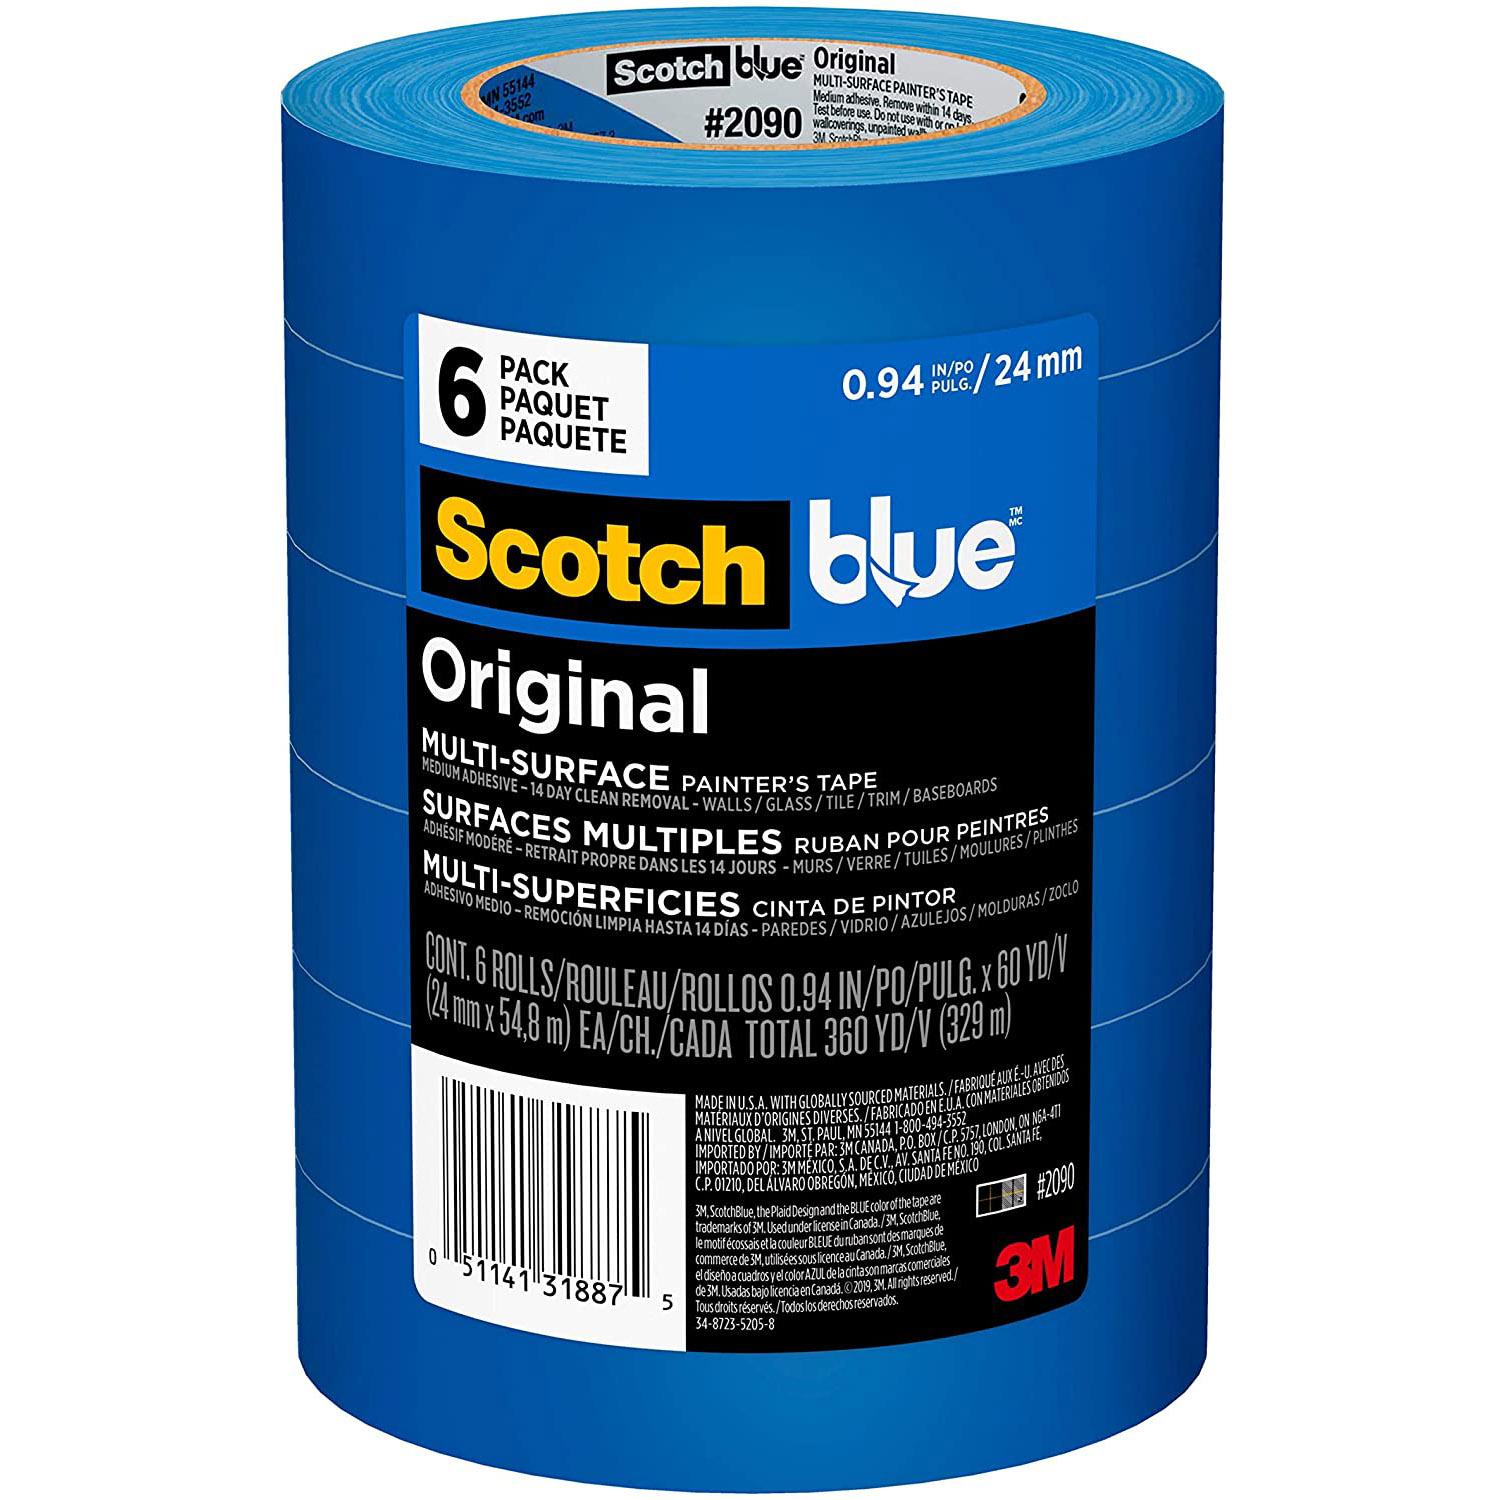 6 3M ScotchBlue Original Painters Tape for 13.79